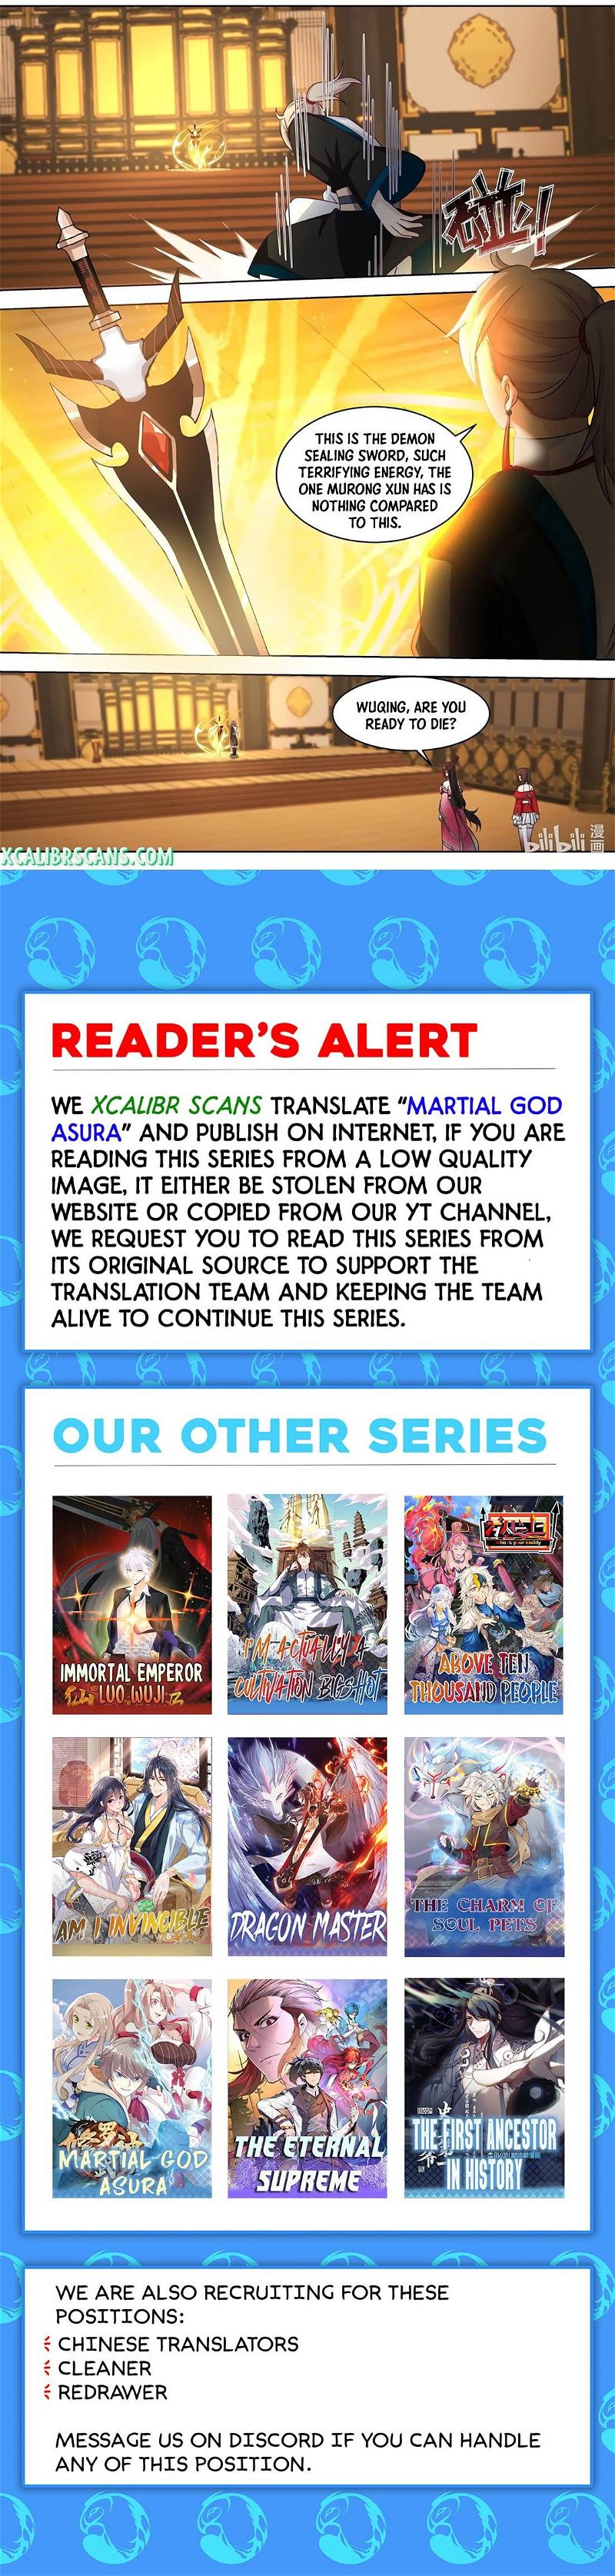 Martial God Asura Chapter 525 page 10